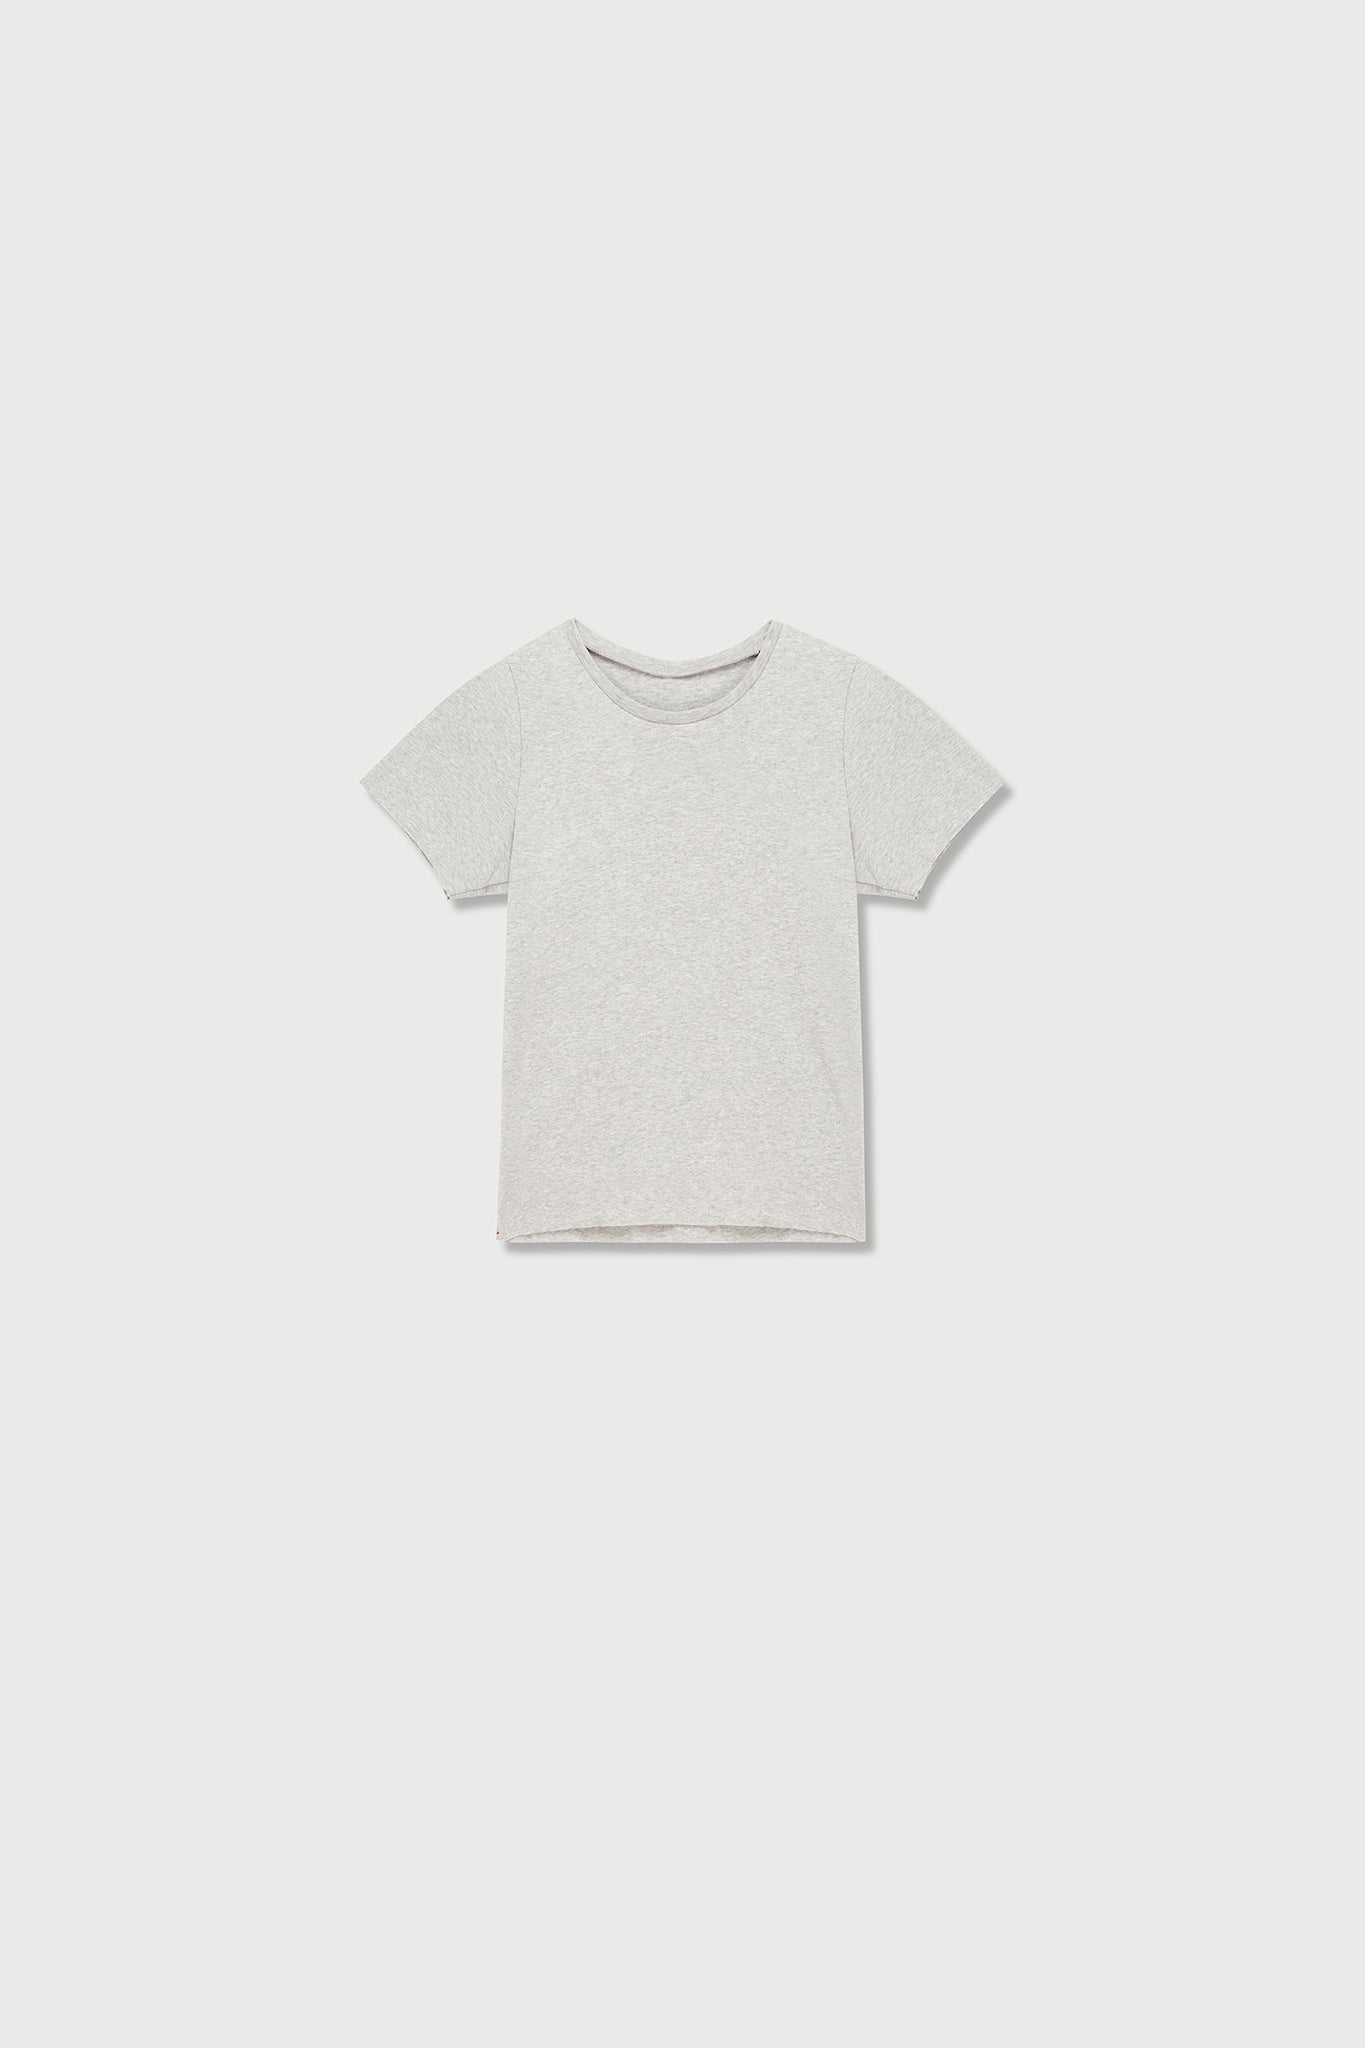 A.BCH A.35 Grey Marle Rib T-Shirt in Organic Cotton Rib